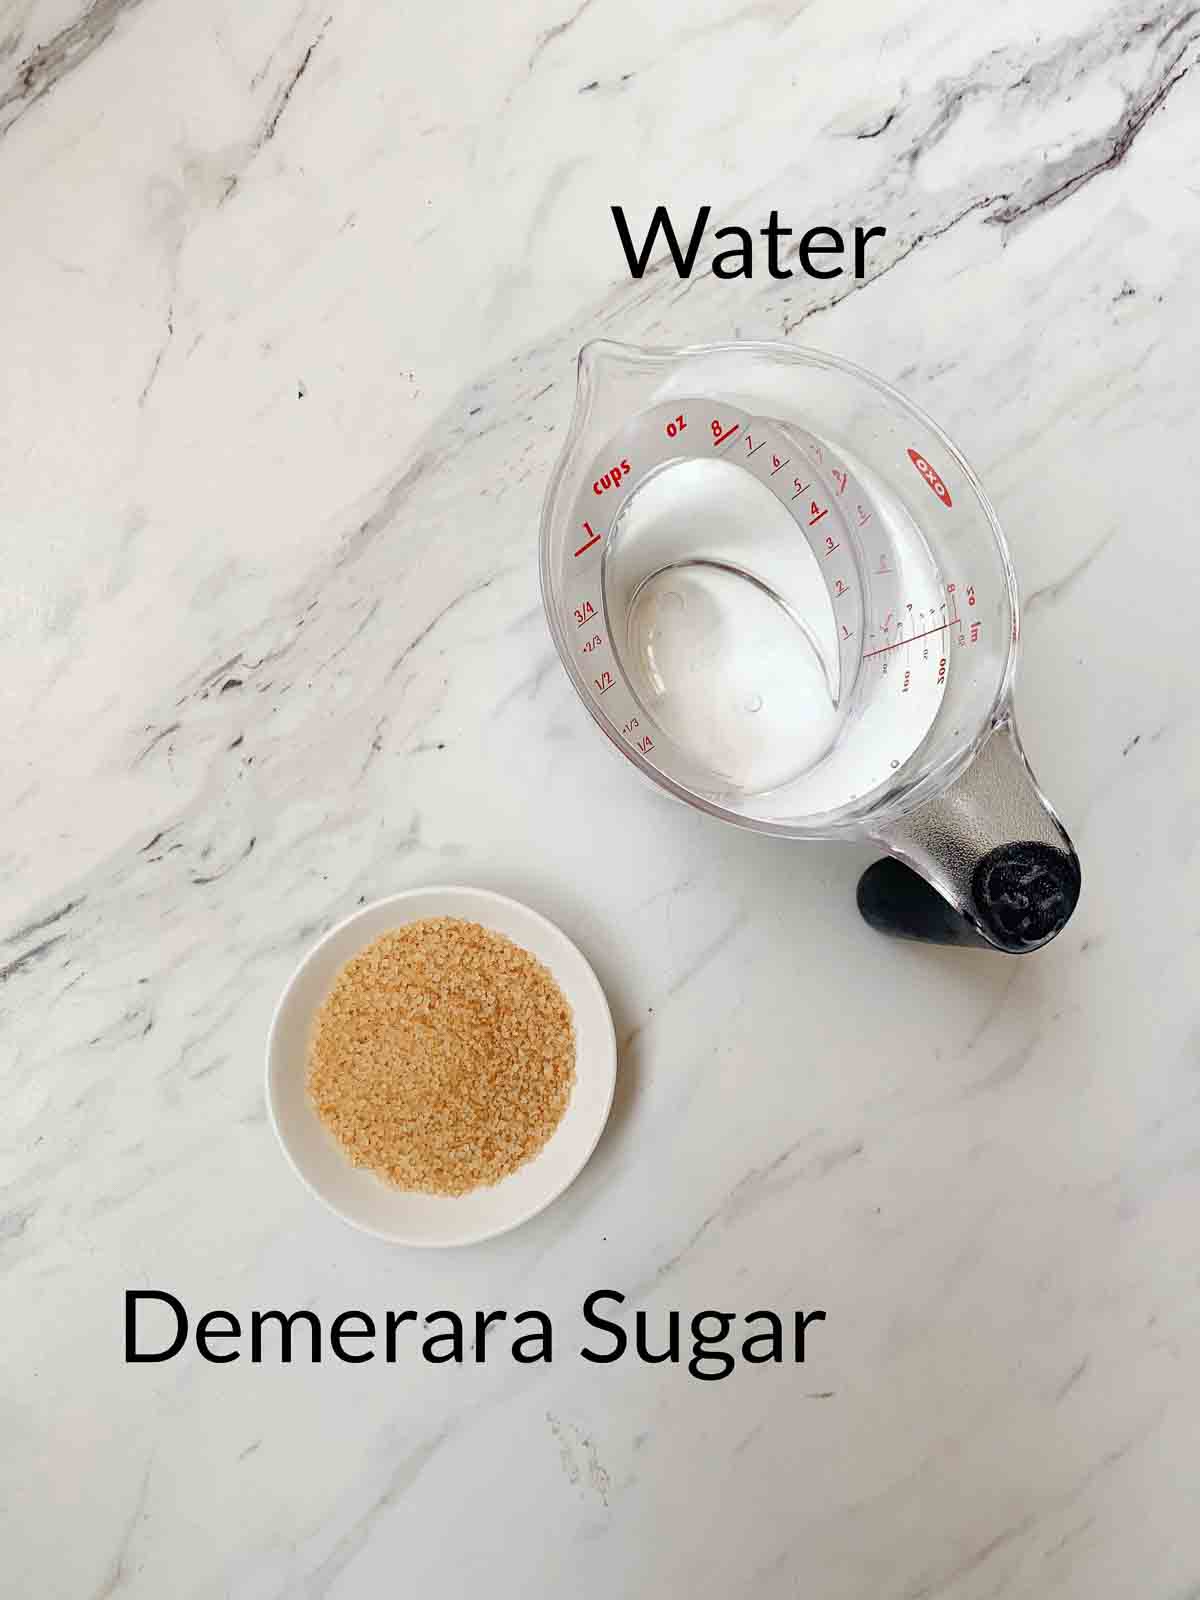 a measuring glass of water and dish of demerara sugar, the ingredients for demerara sugar. i